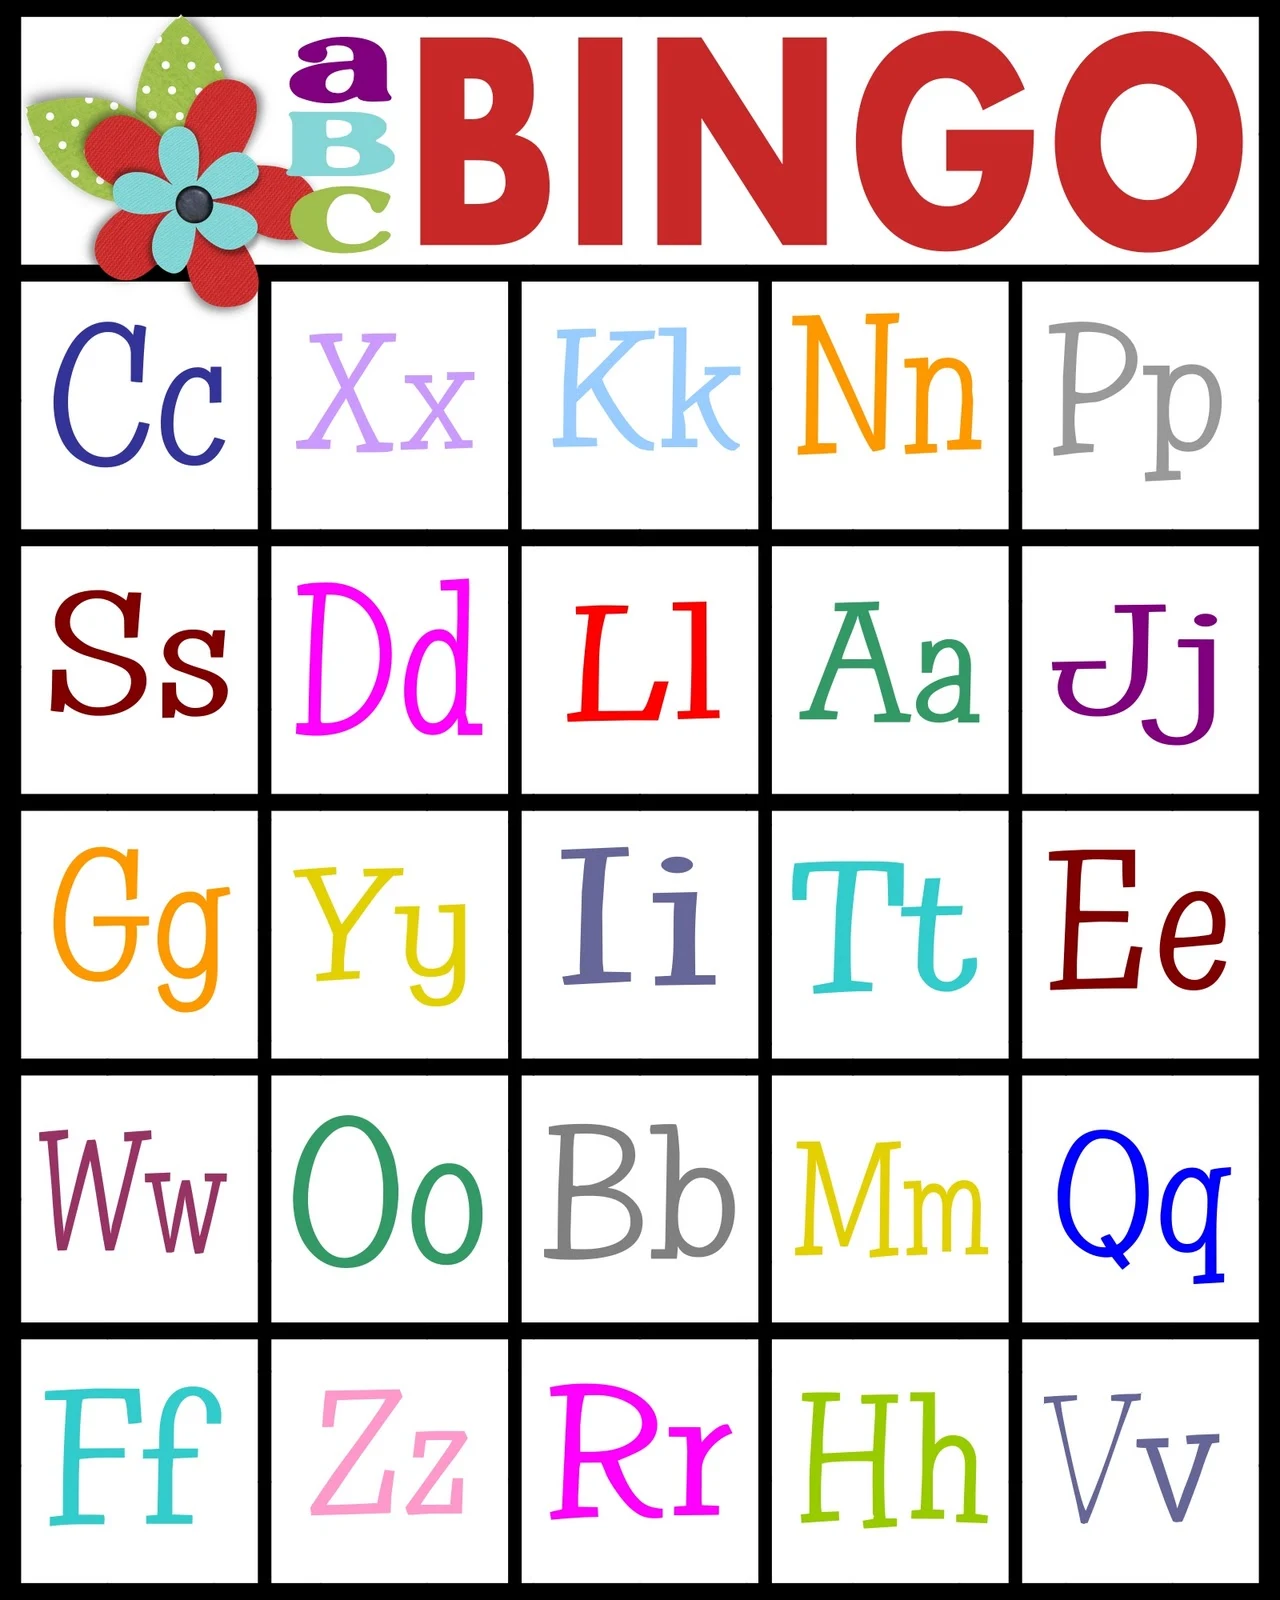 ABC Bingo 4peatssake